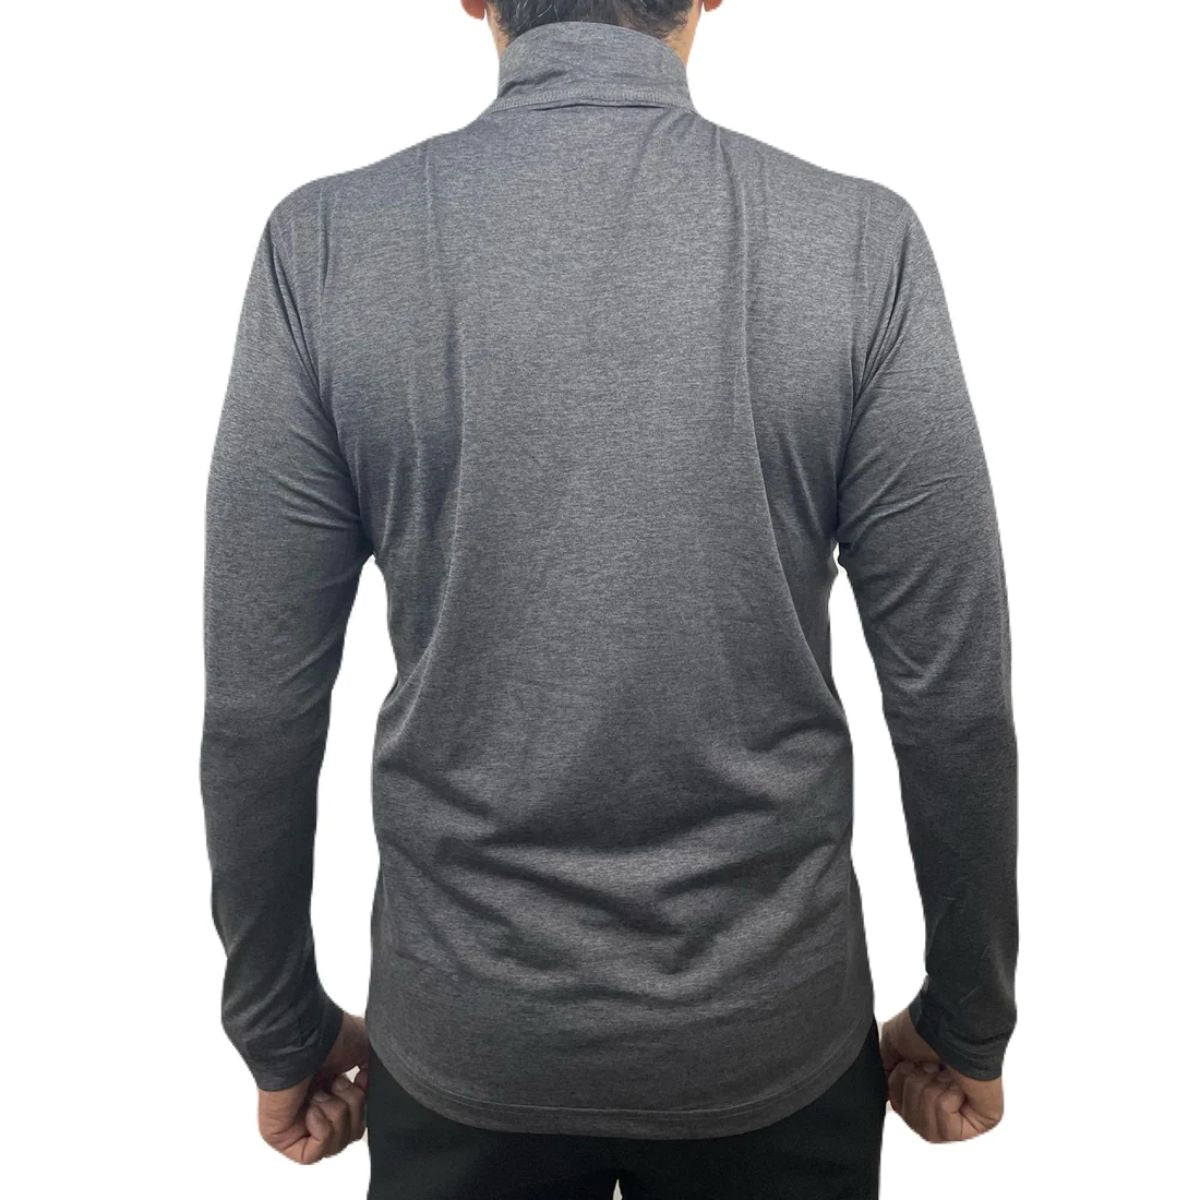 Kaza All Season Outdoor & Trekking T-Shirt - Grey